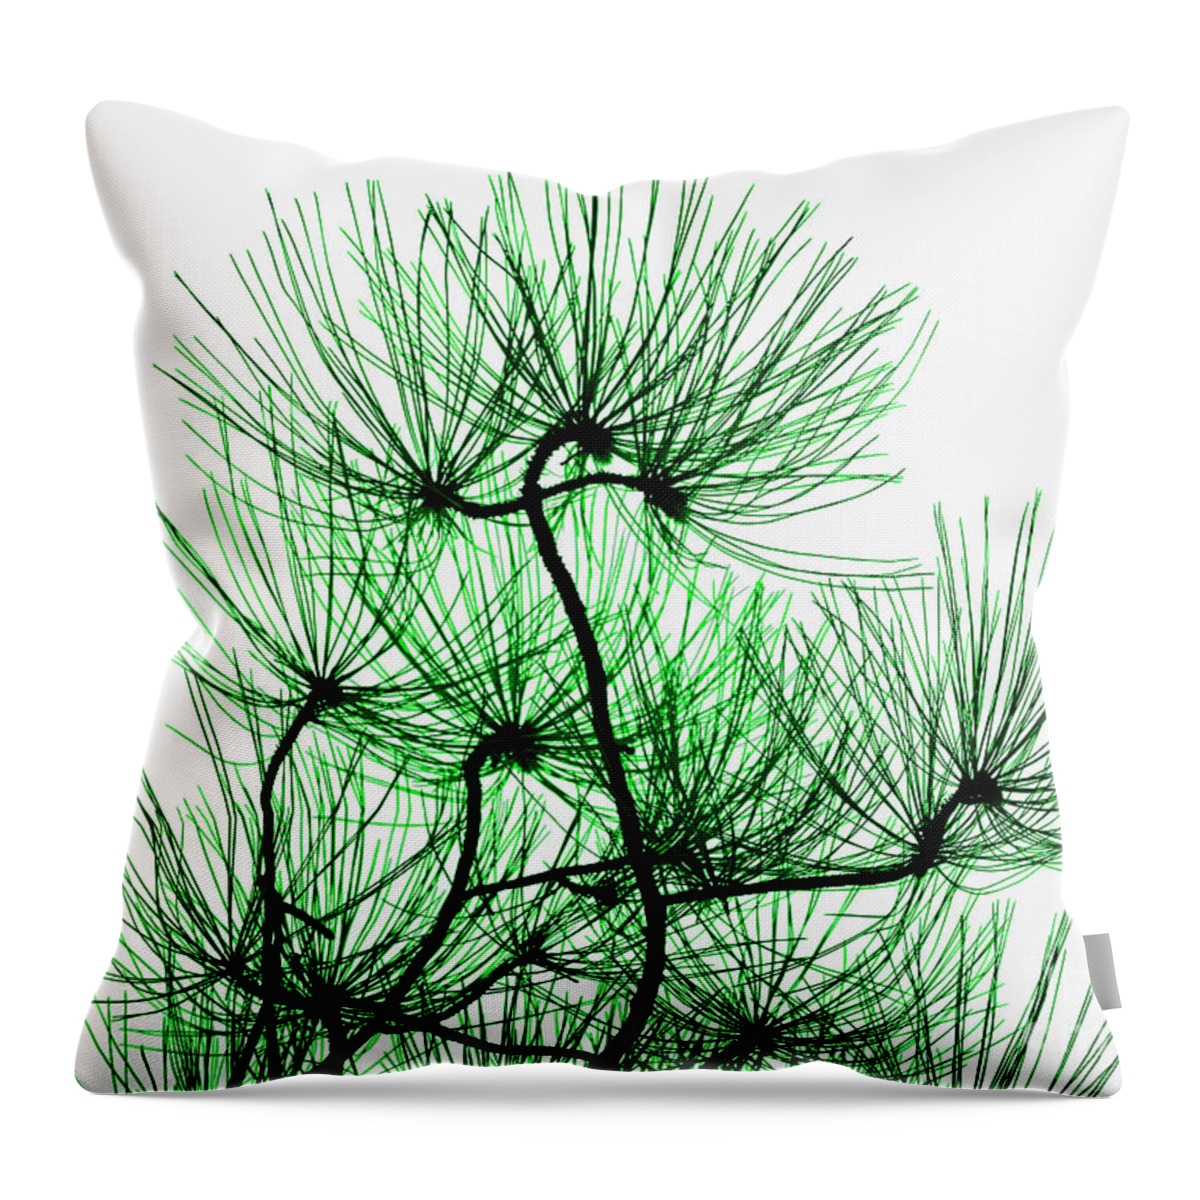 Top Artist Throw Pillow featuring the photograph Pine Needles in Black and Green by Norman Gabitzsch